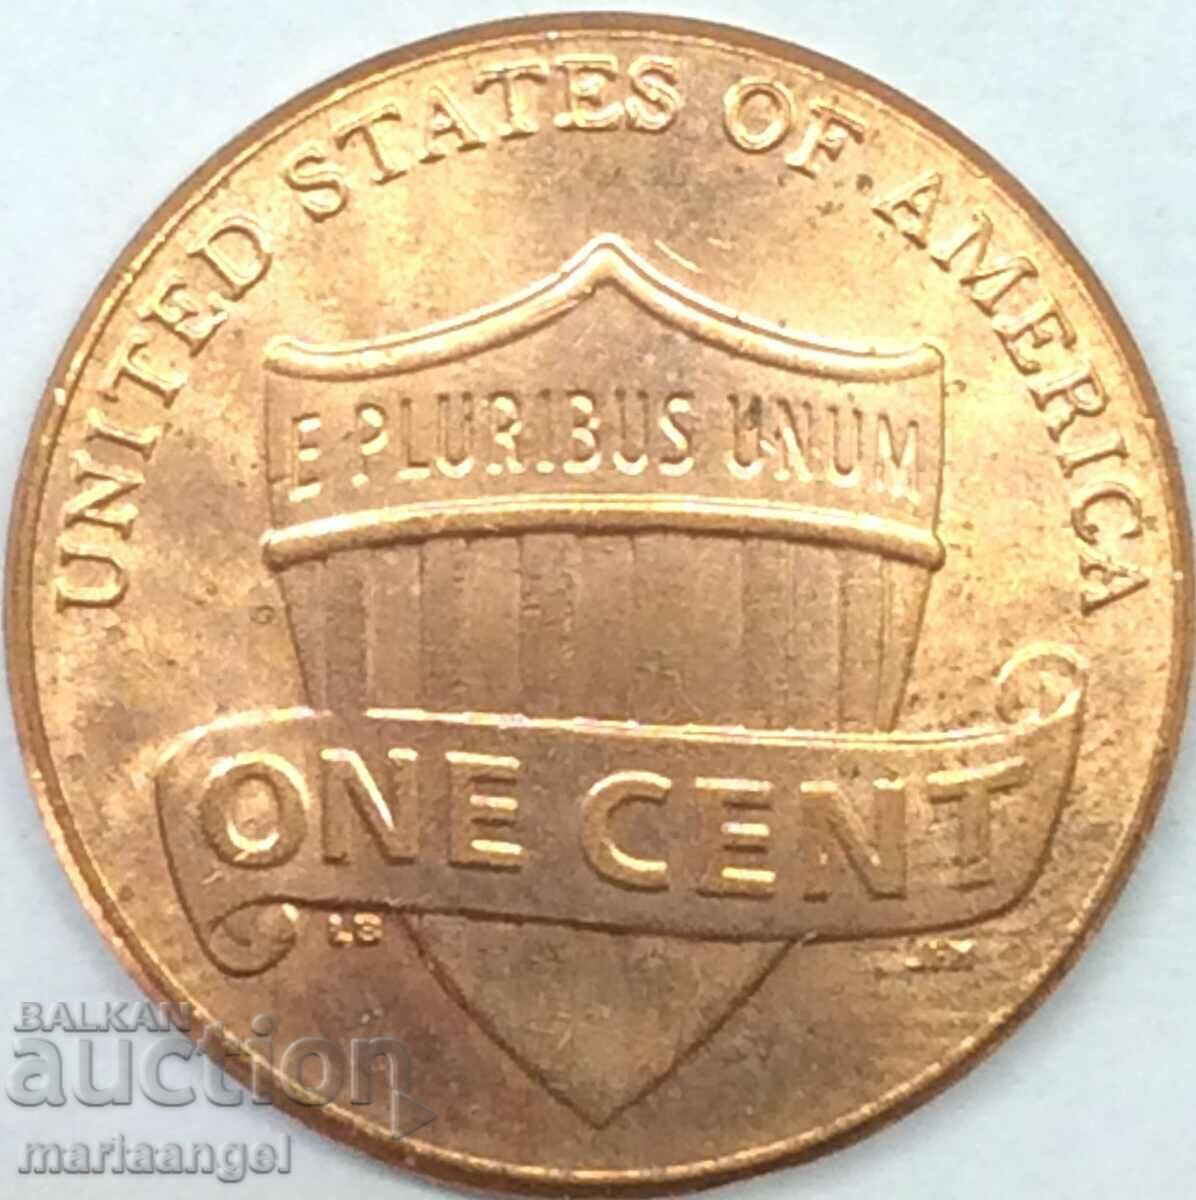 US 1 cent 2016